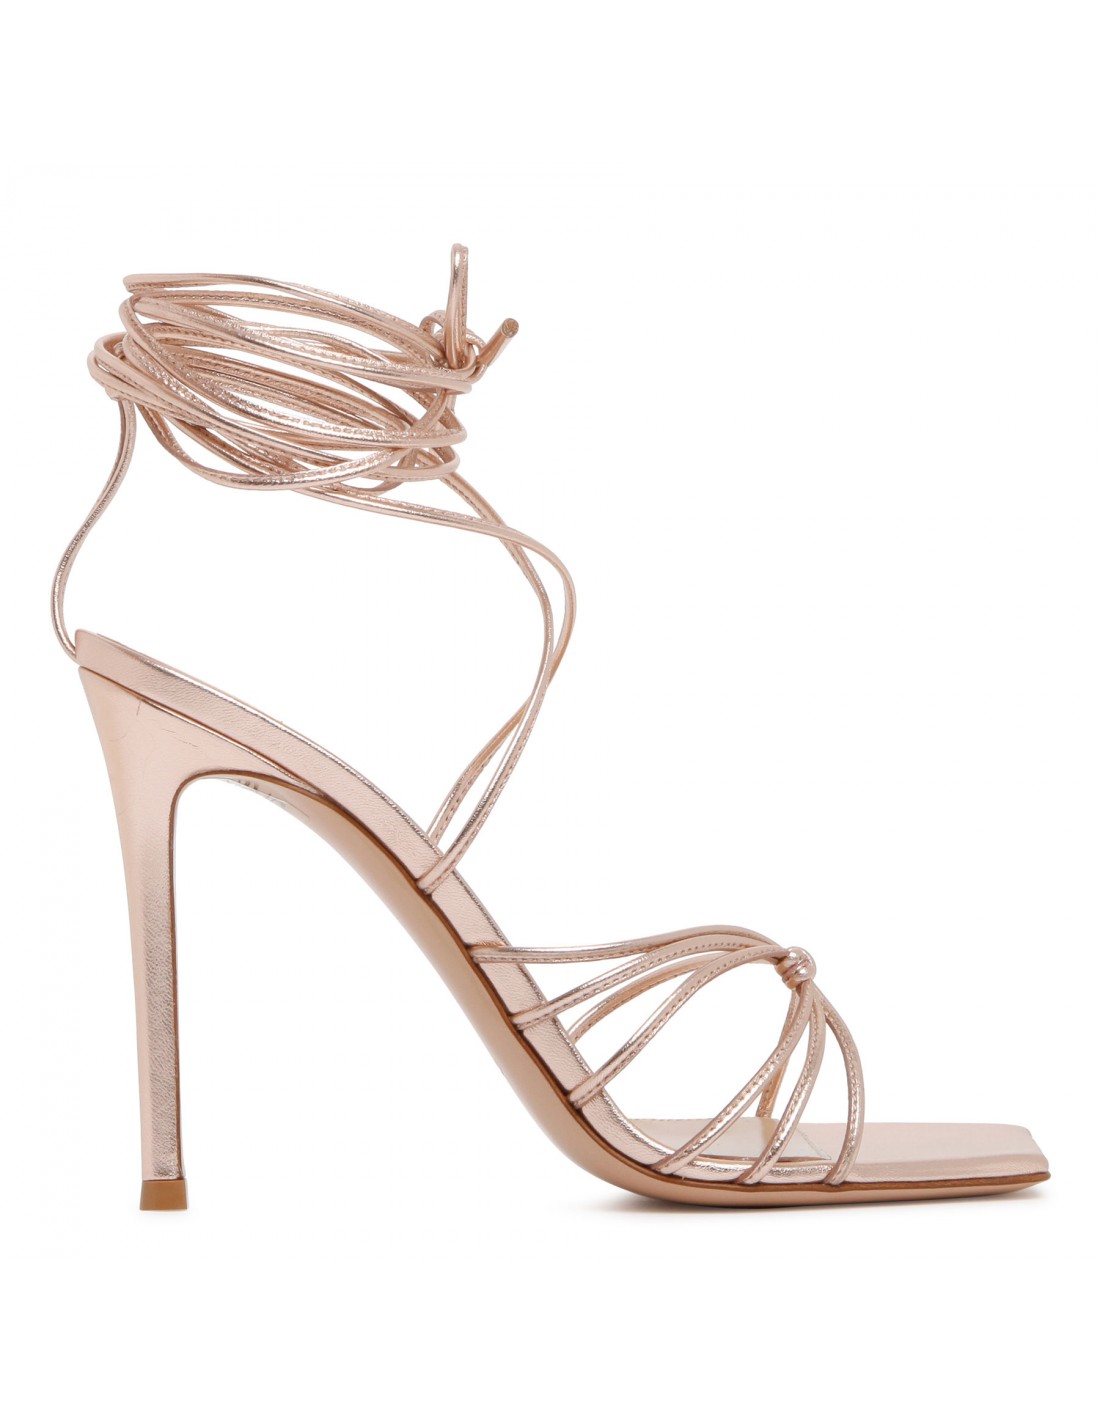 Sylvie metallic peach sandals